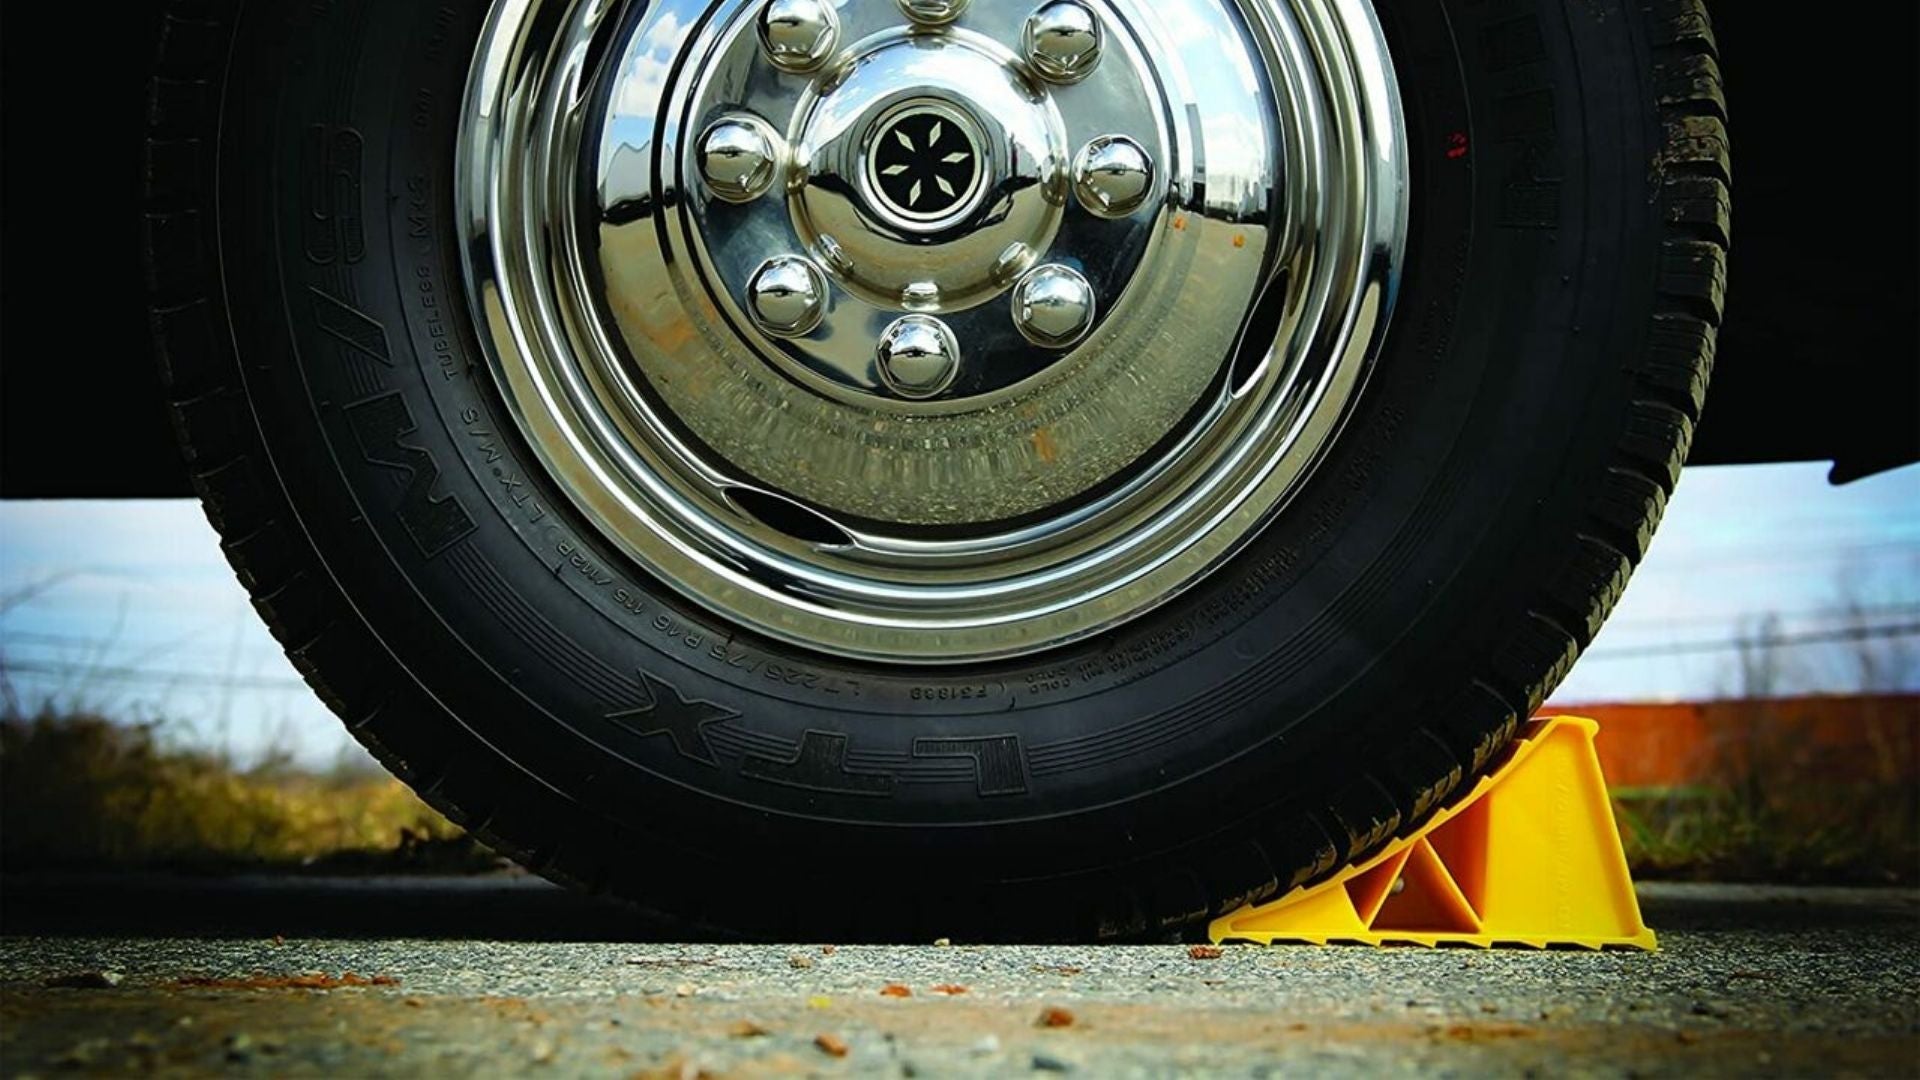 Haofy 2 PCs Wheel Chocks with Handle Car Anti-slip Block Tyre Saver Brake Stoppers Ridged Caravan Horsebox Wedges Trailer 